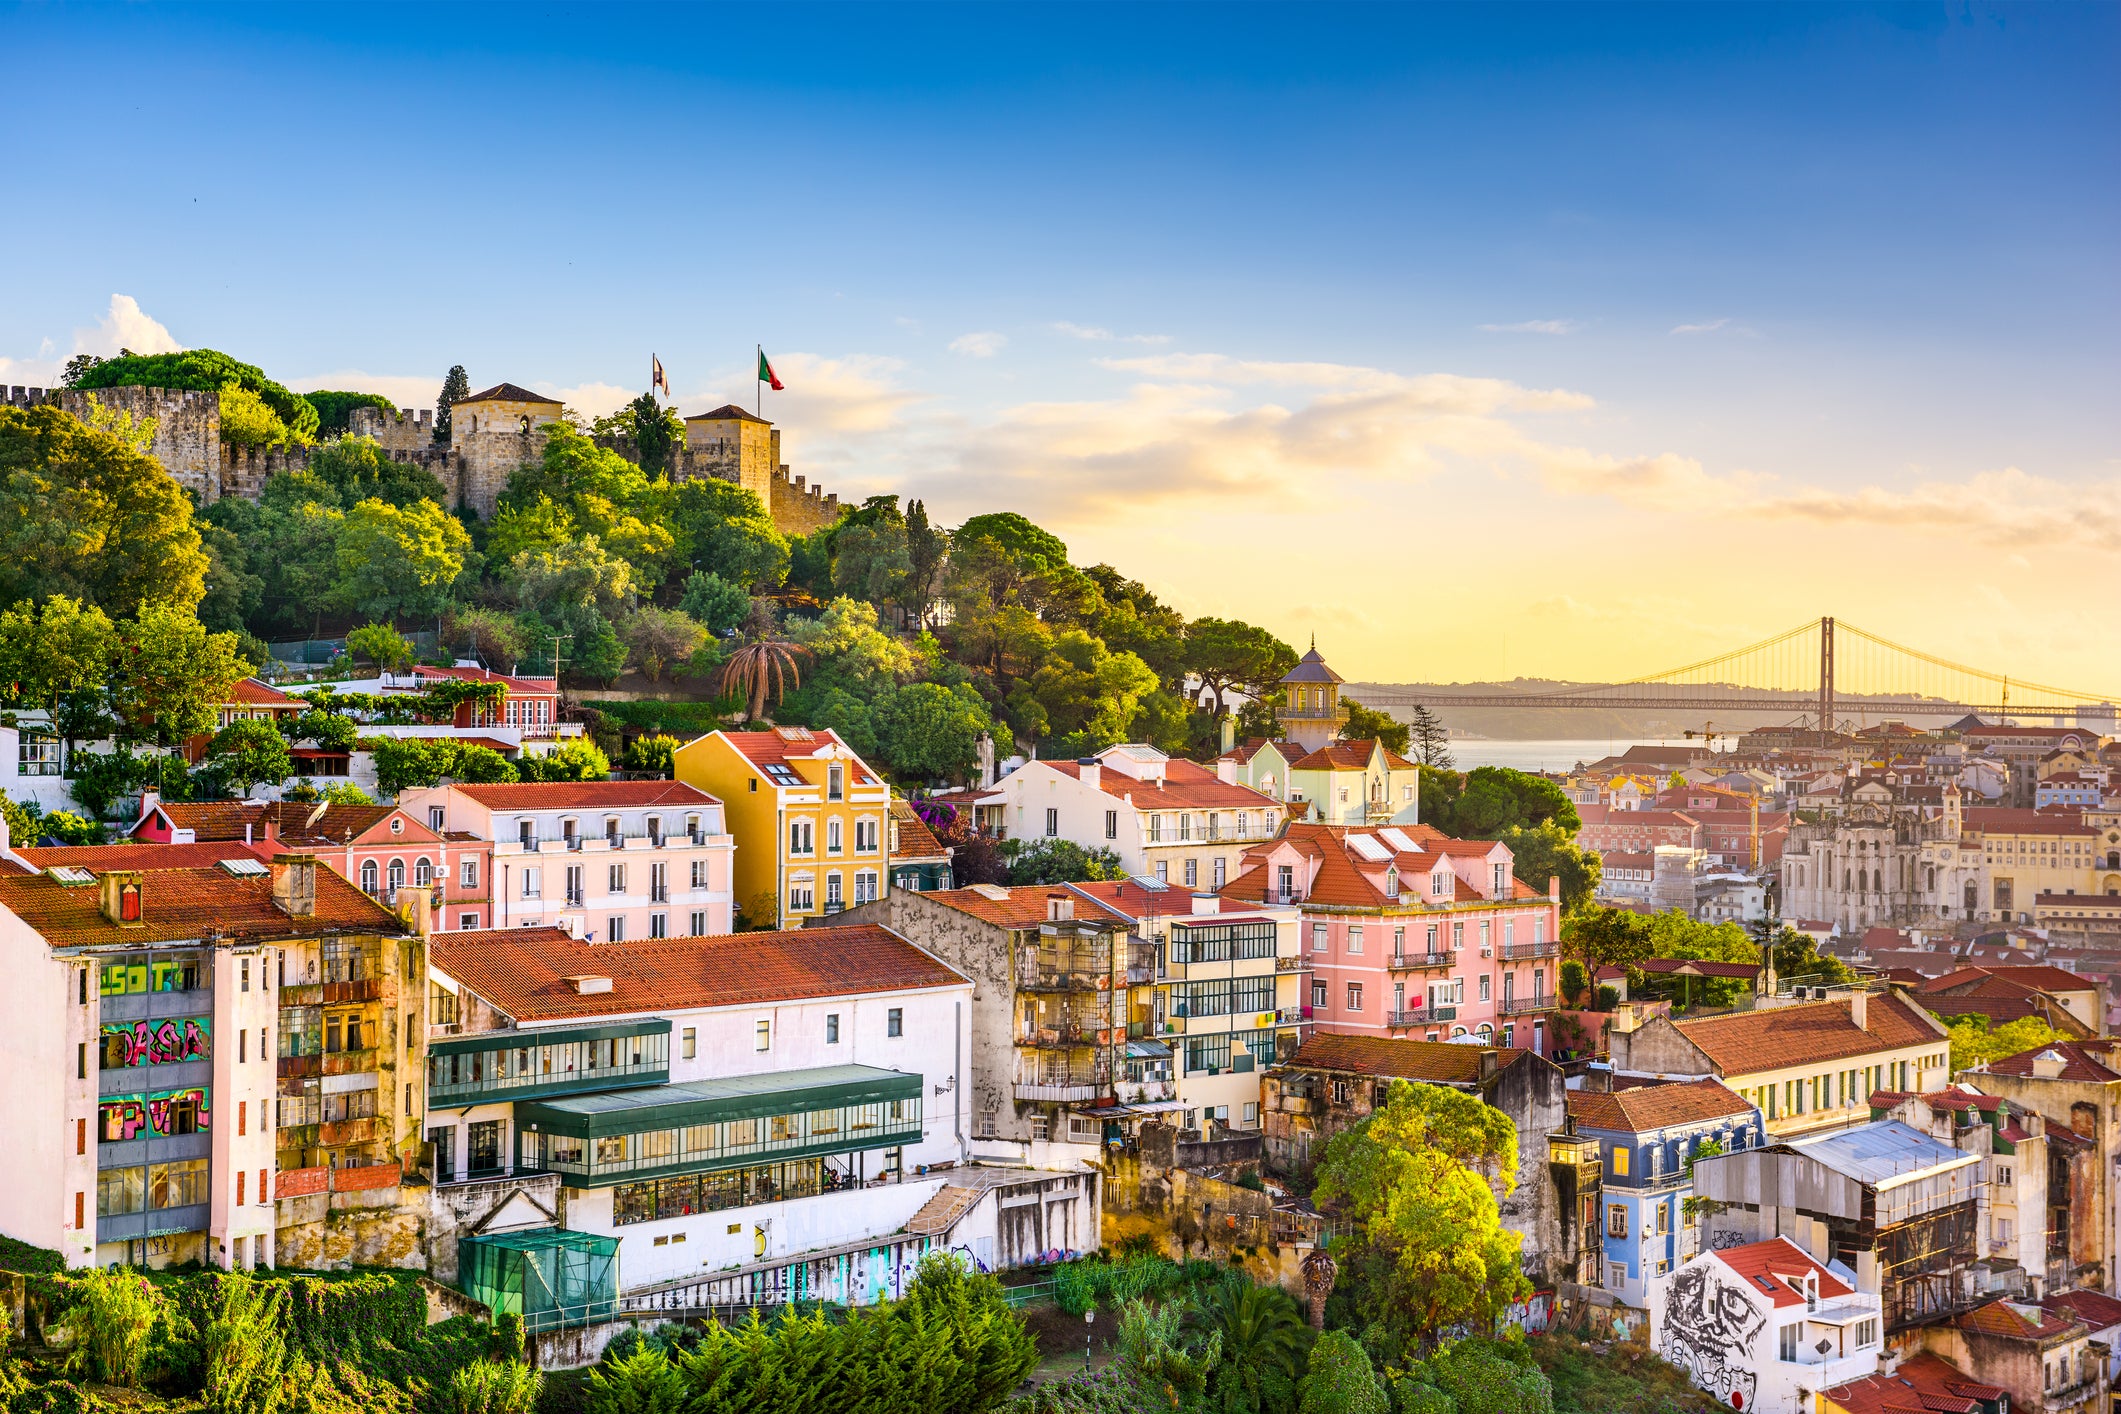 Lisbon, the Portuguese capital